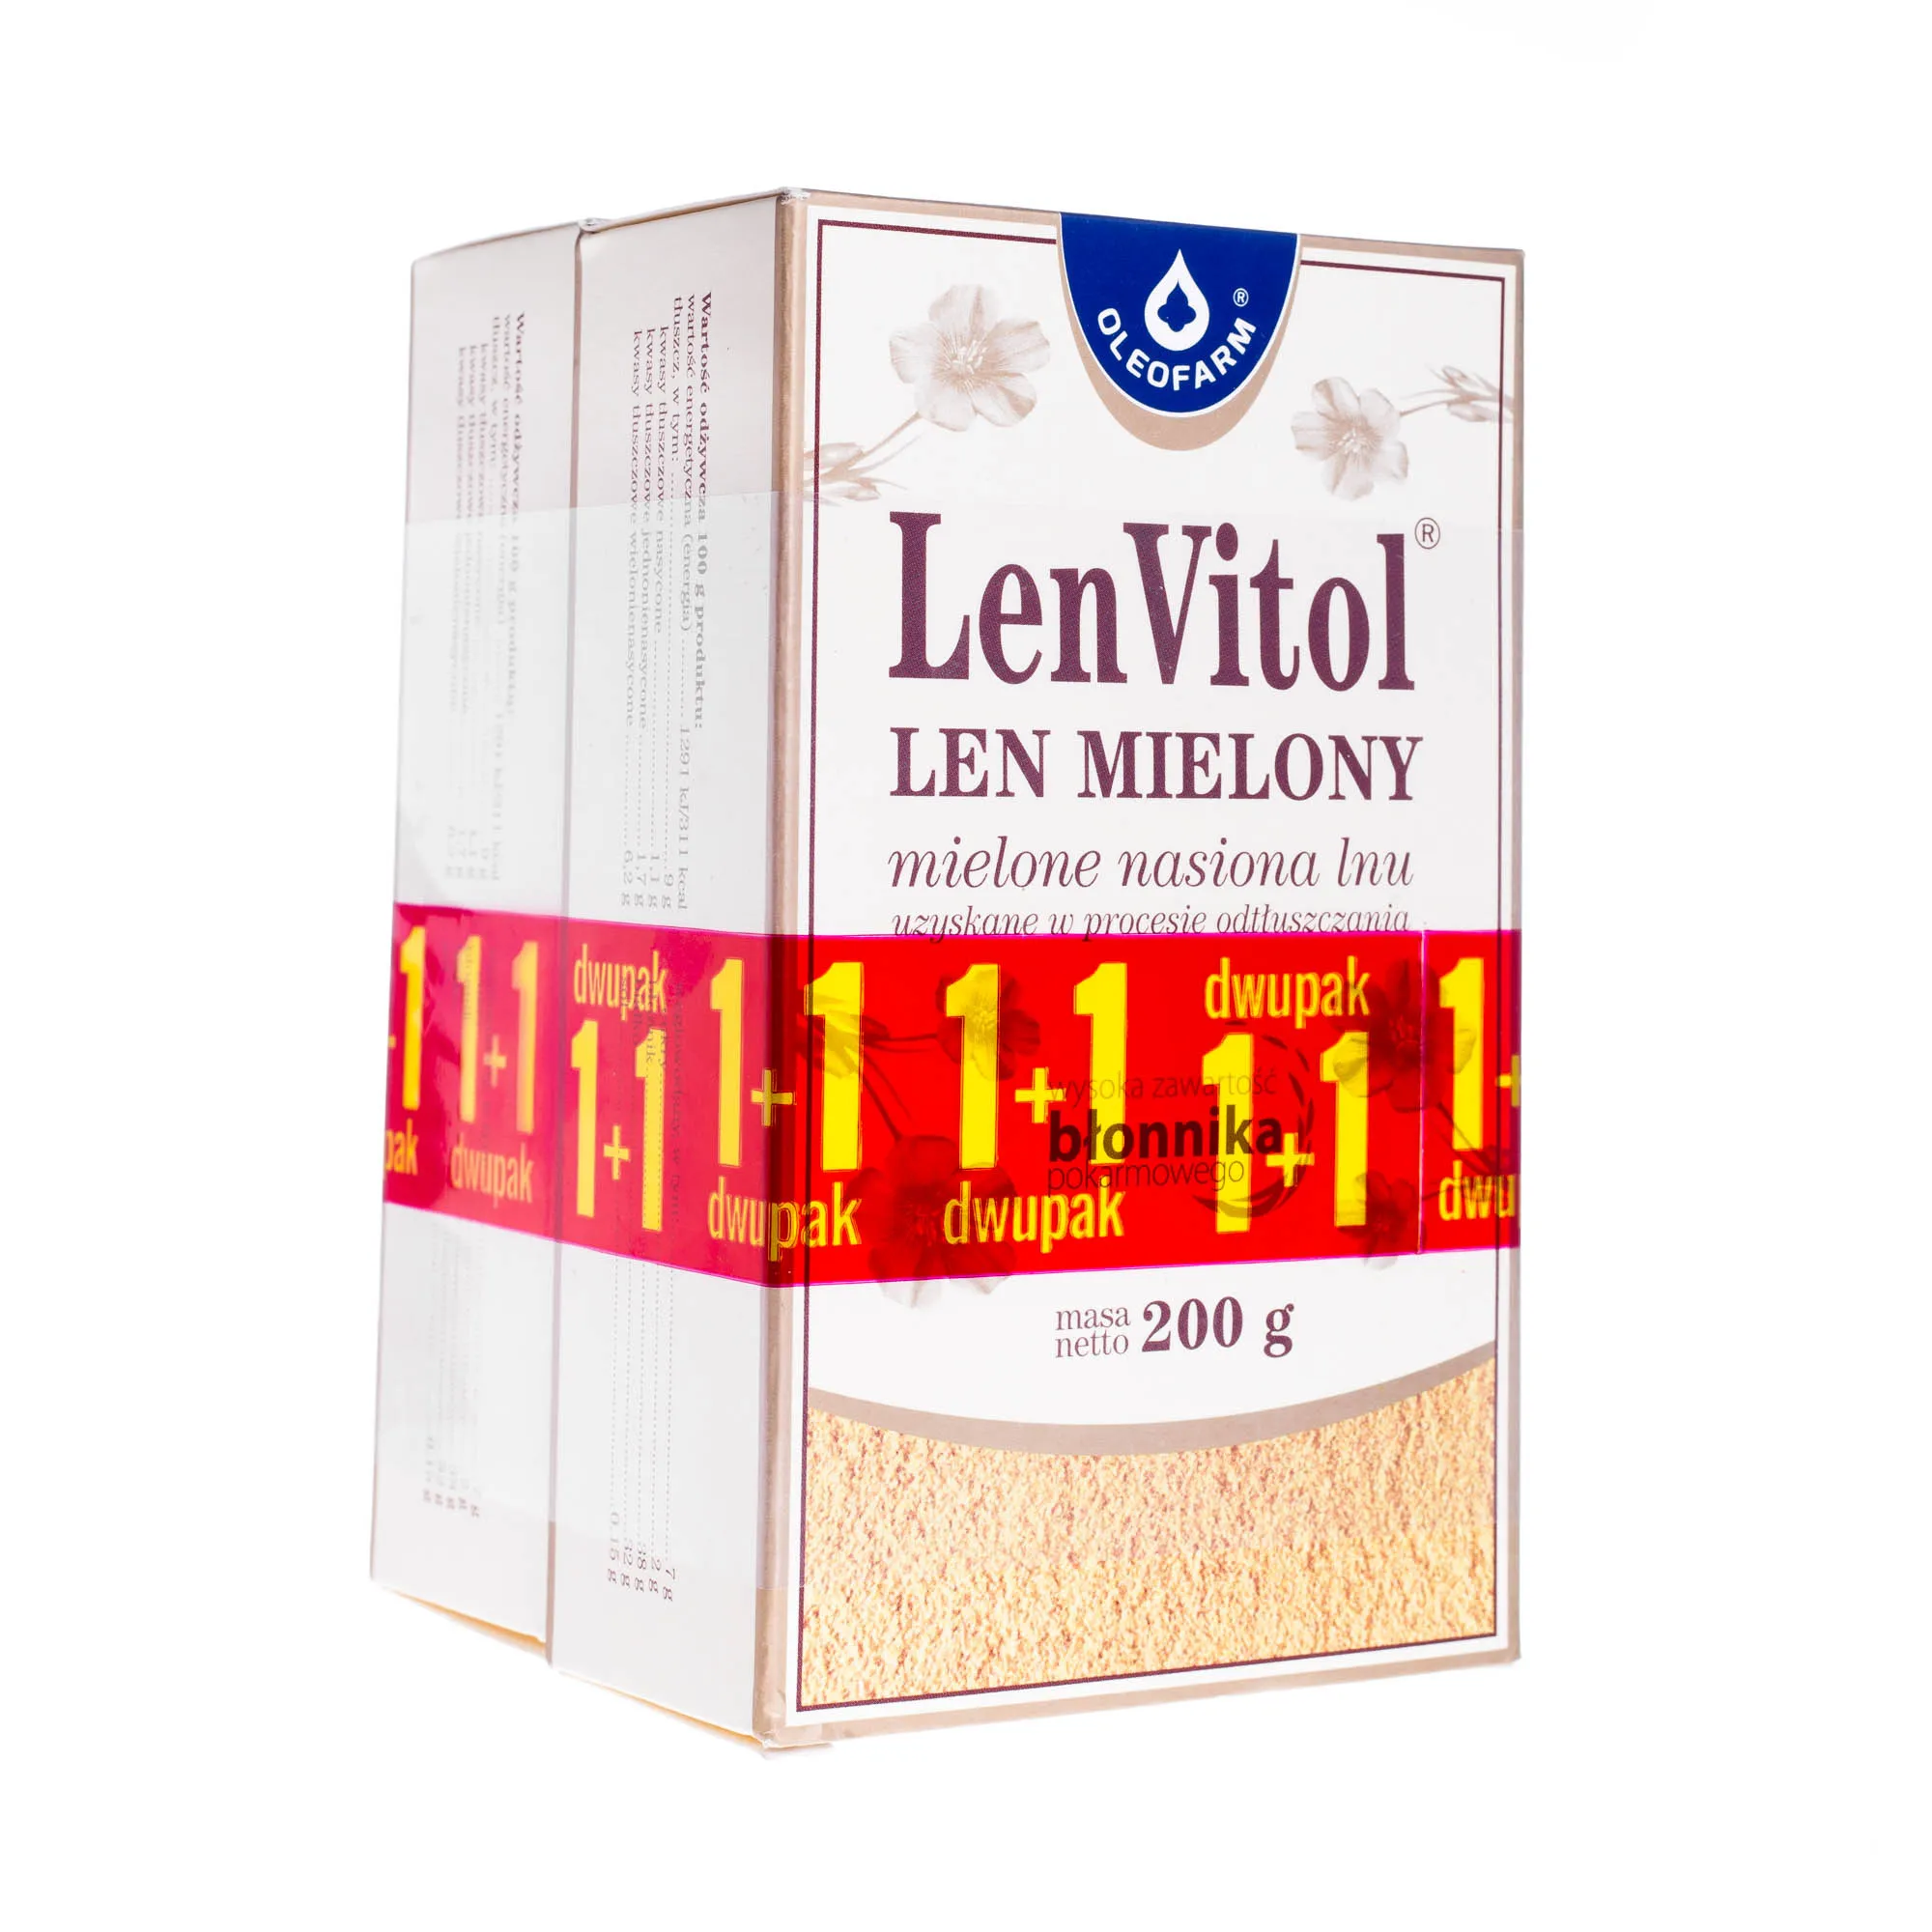 LenVitol, len mielony, 2 x 200 g